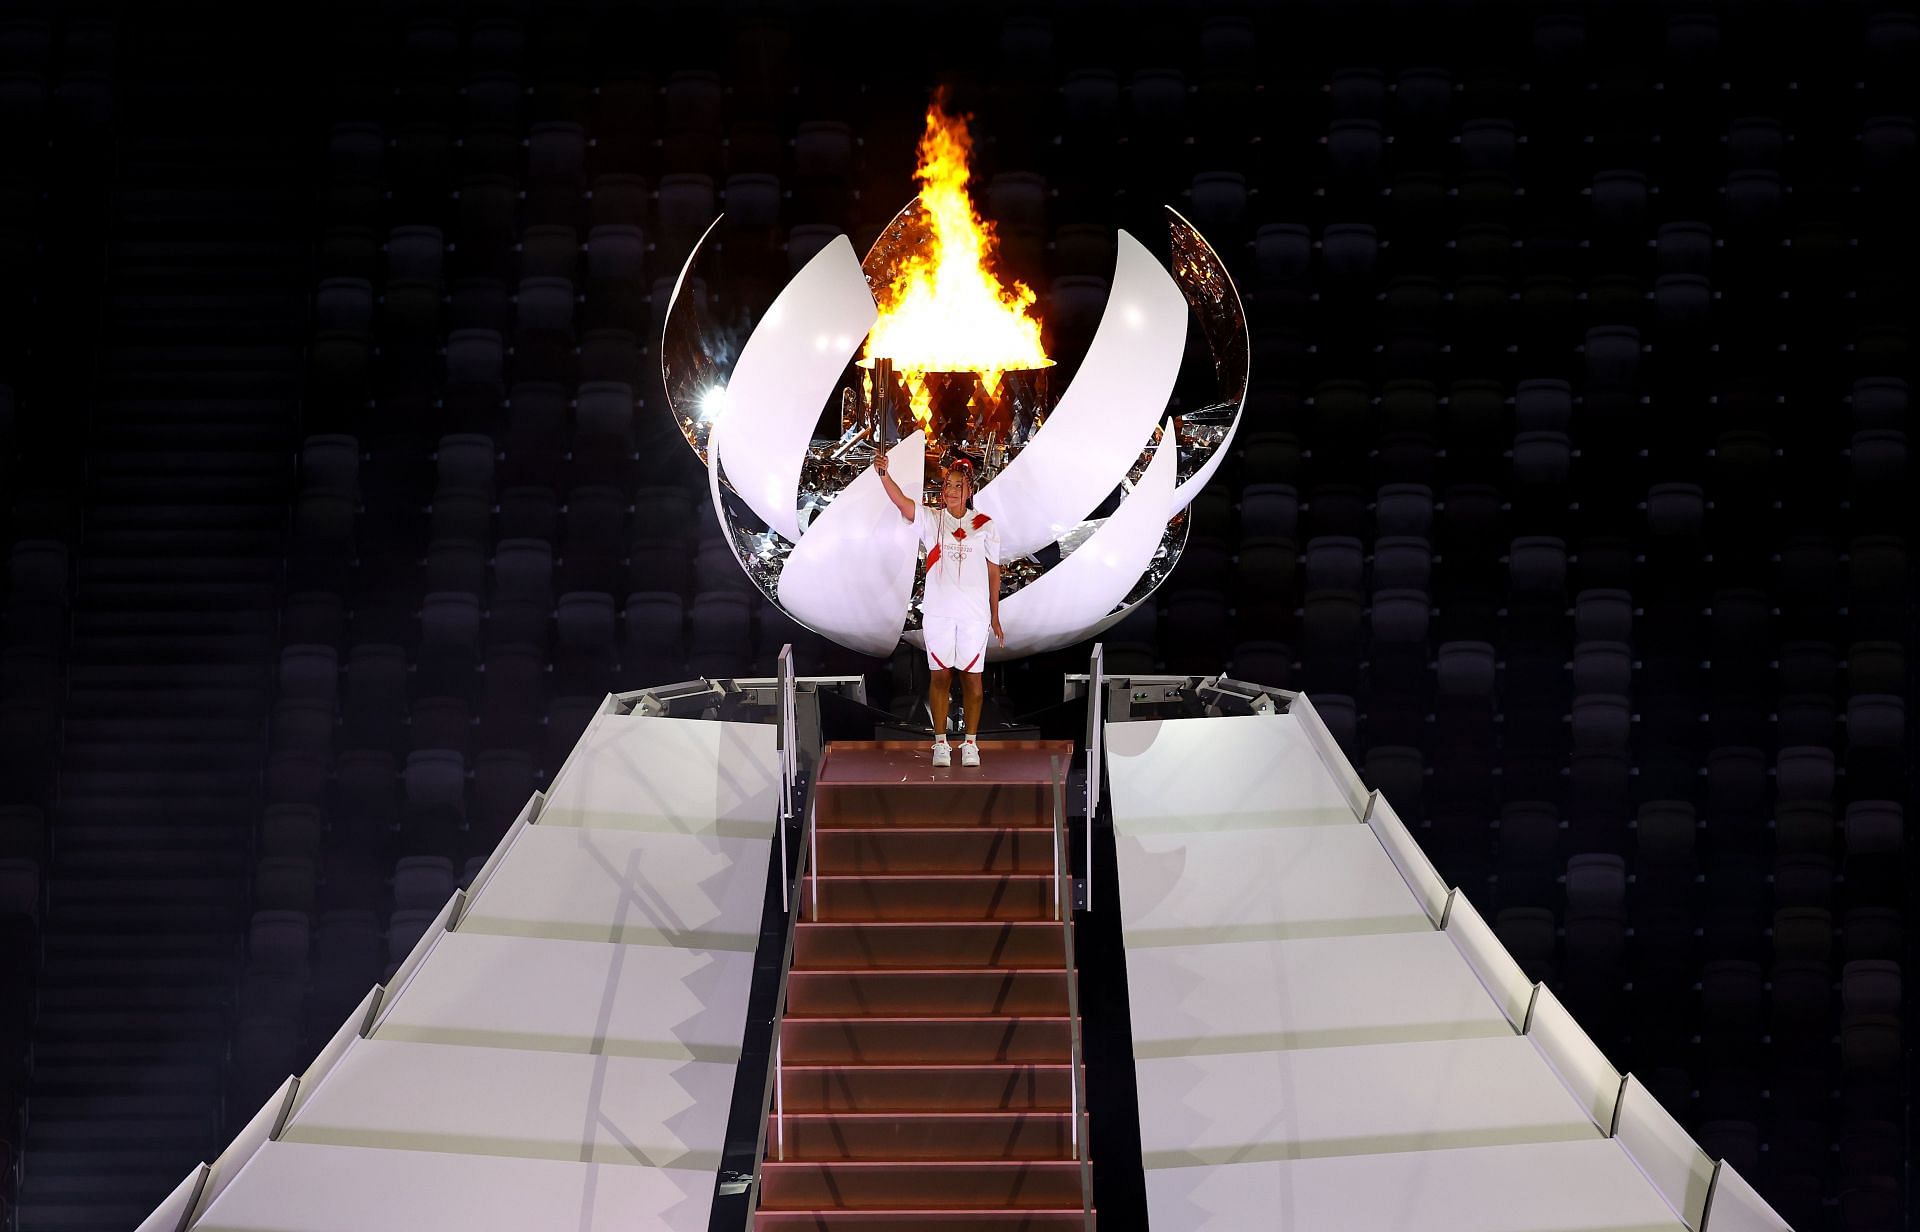 Naomi Osaka lit the Olympic cauldron, representing the whole of Japan